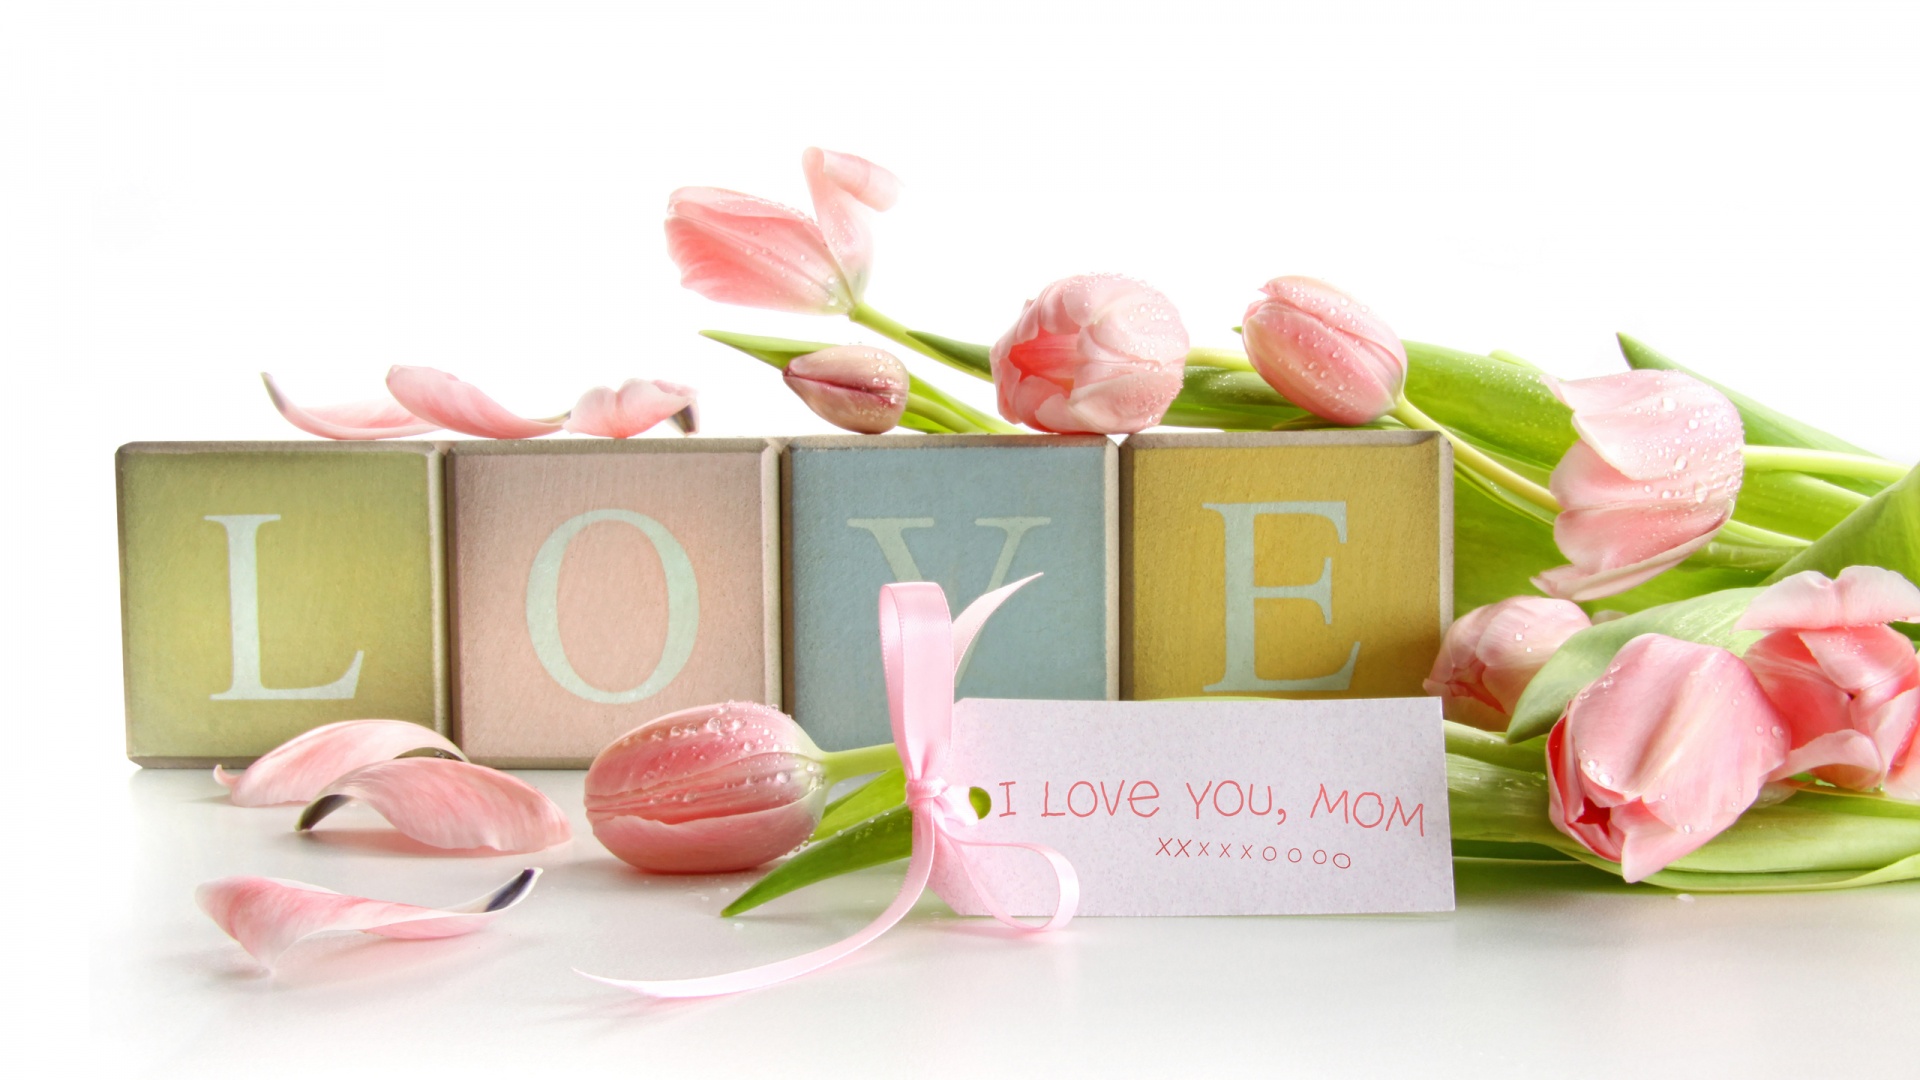 Mother S Day Desktop Background Wallpaper High Definition